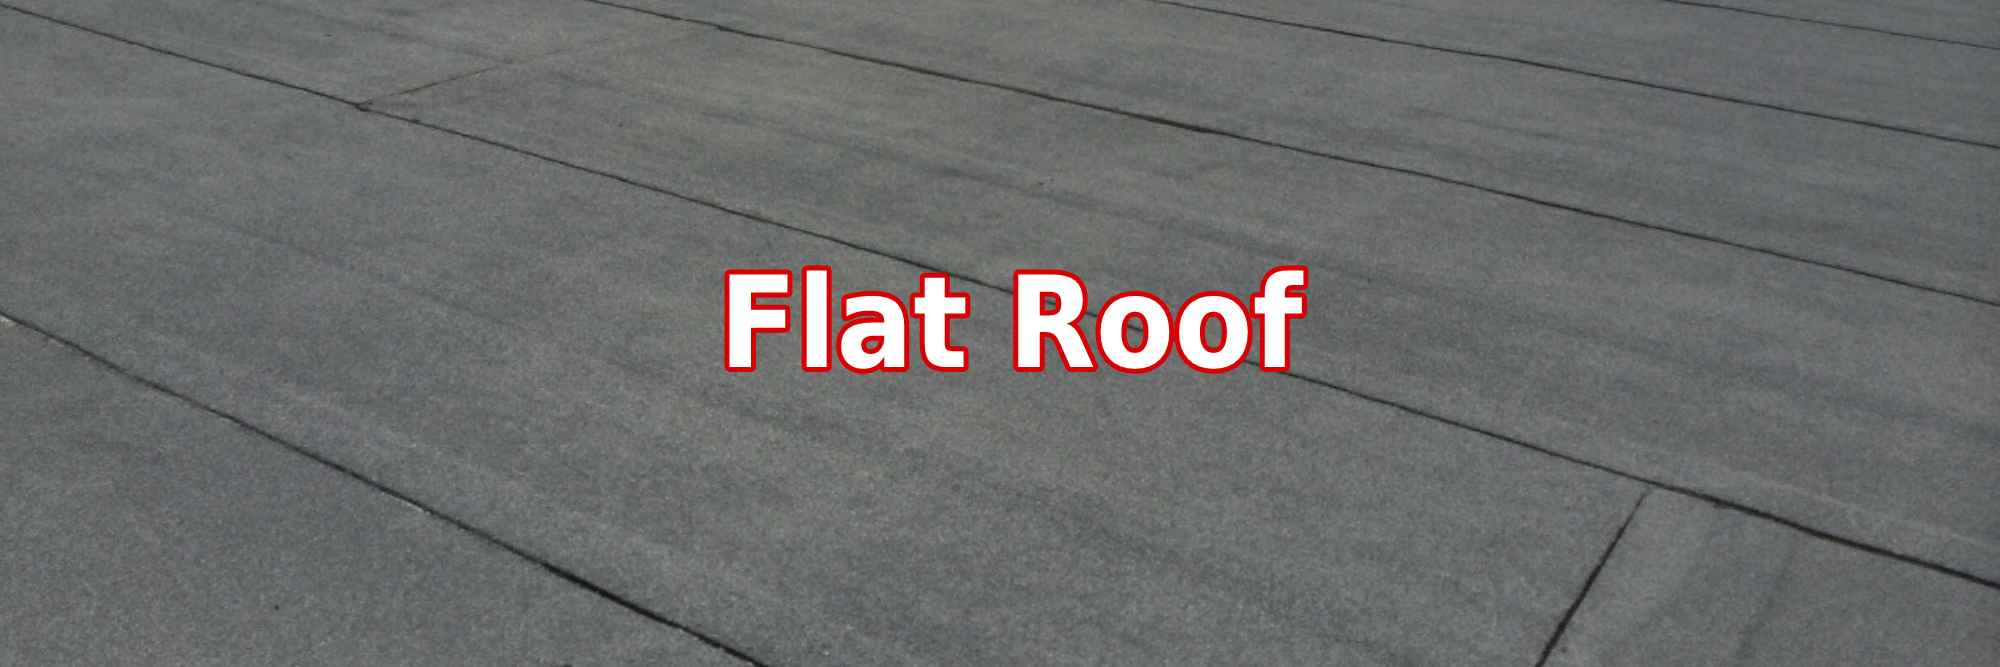 Flat Roof Quiz